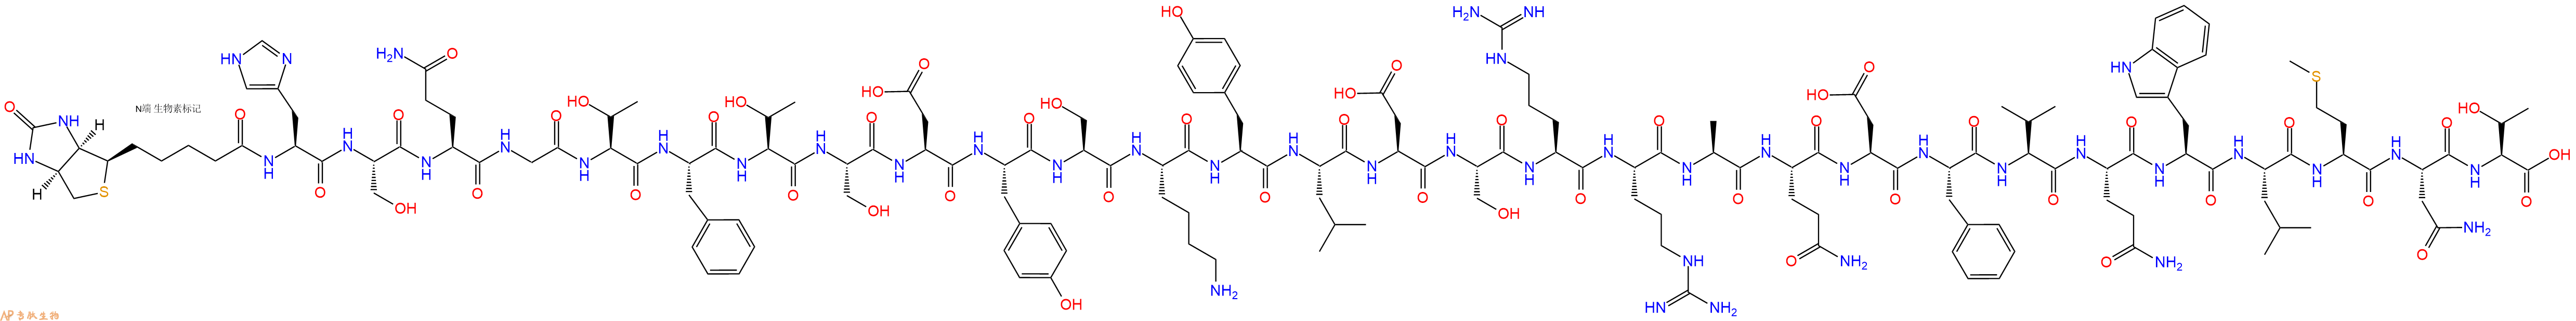 专肽生物产品胰高血糖素Biotin-Glucagon(1-29), human, bovine, porcine1802086-28-7